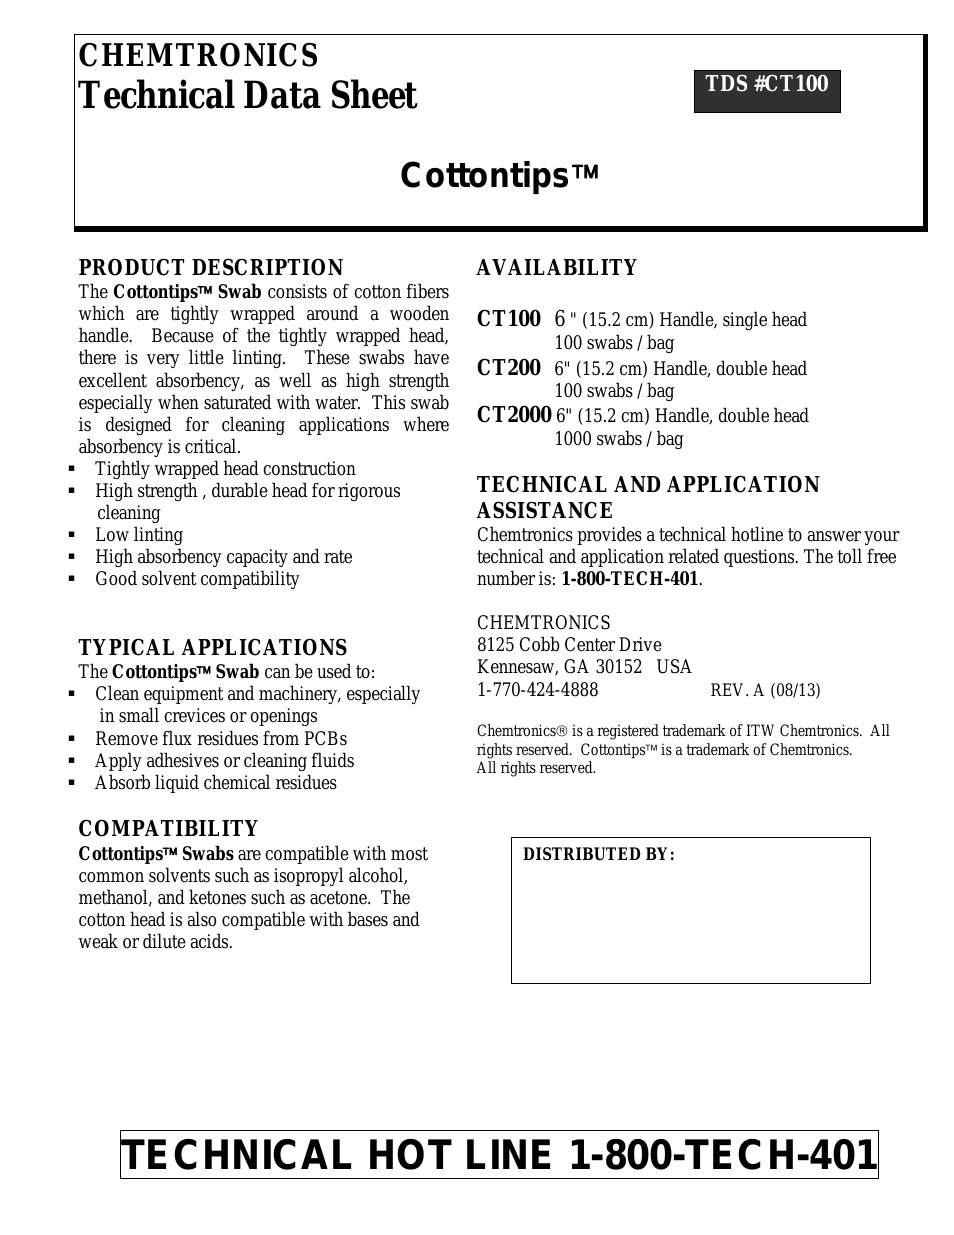 Cottontips CT200